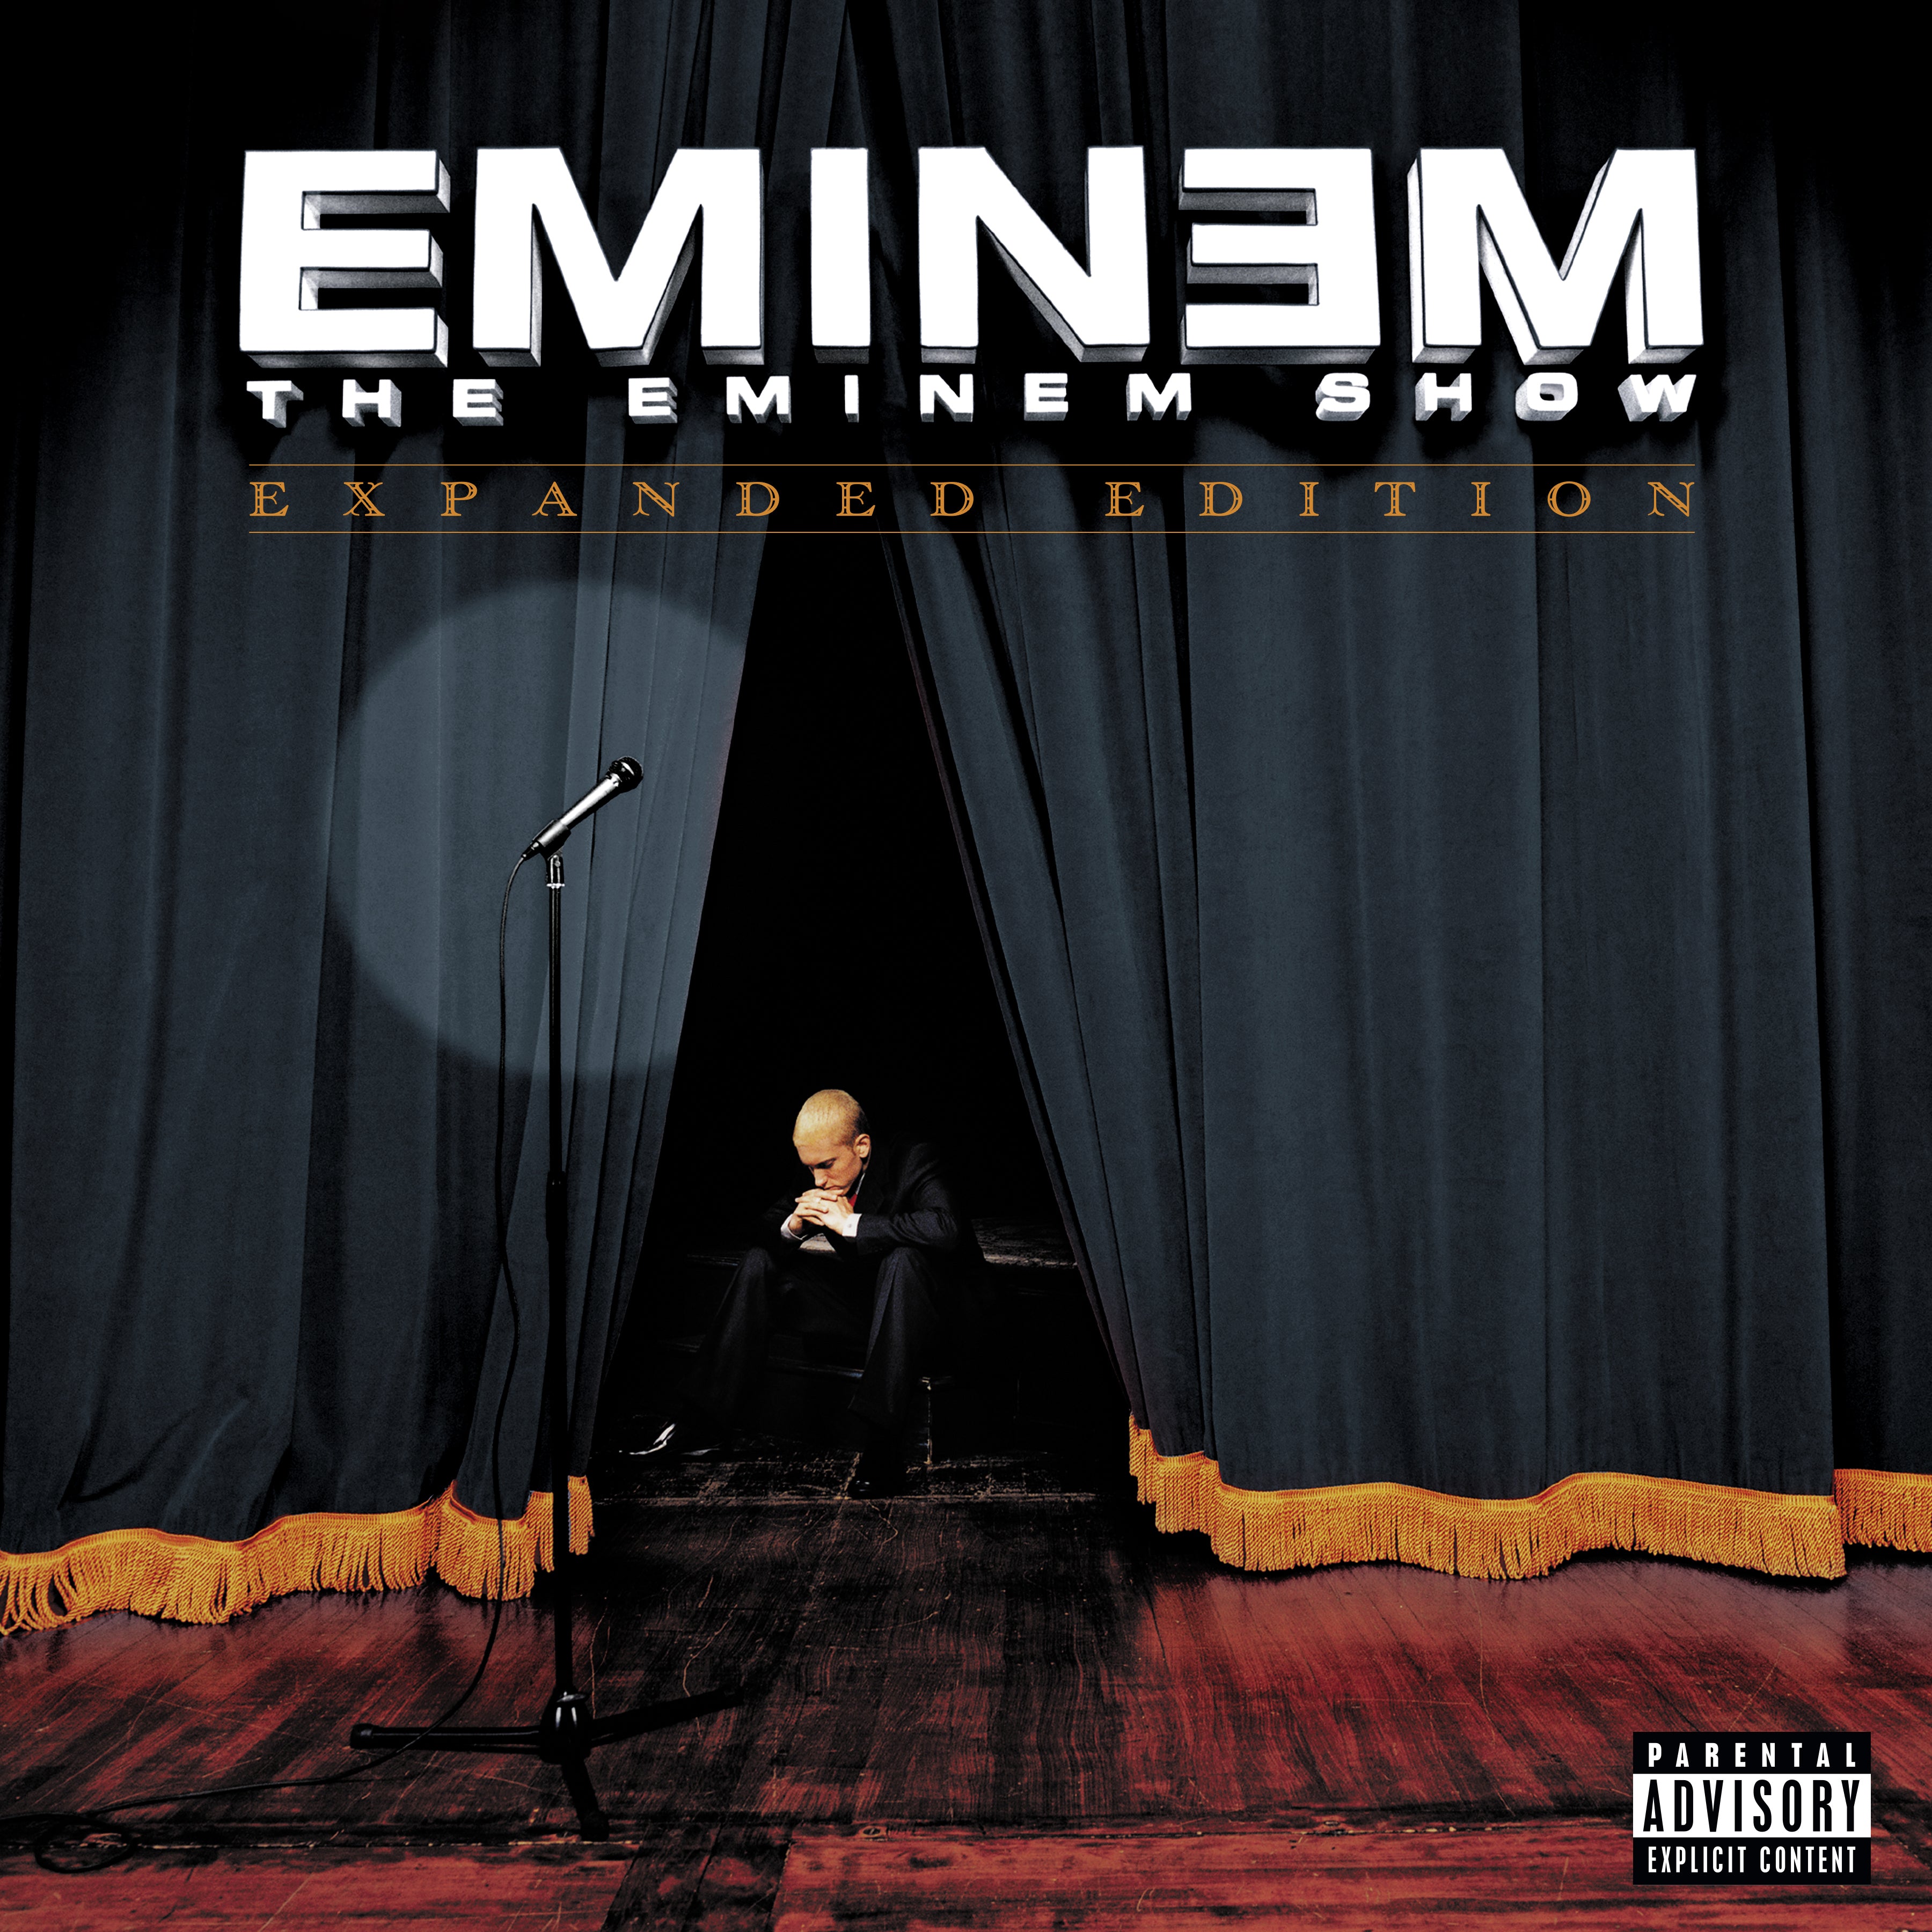 Eminem ‎– The Eminem Show Vinilo Doble - Rebellion Discos